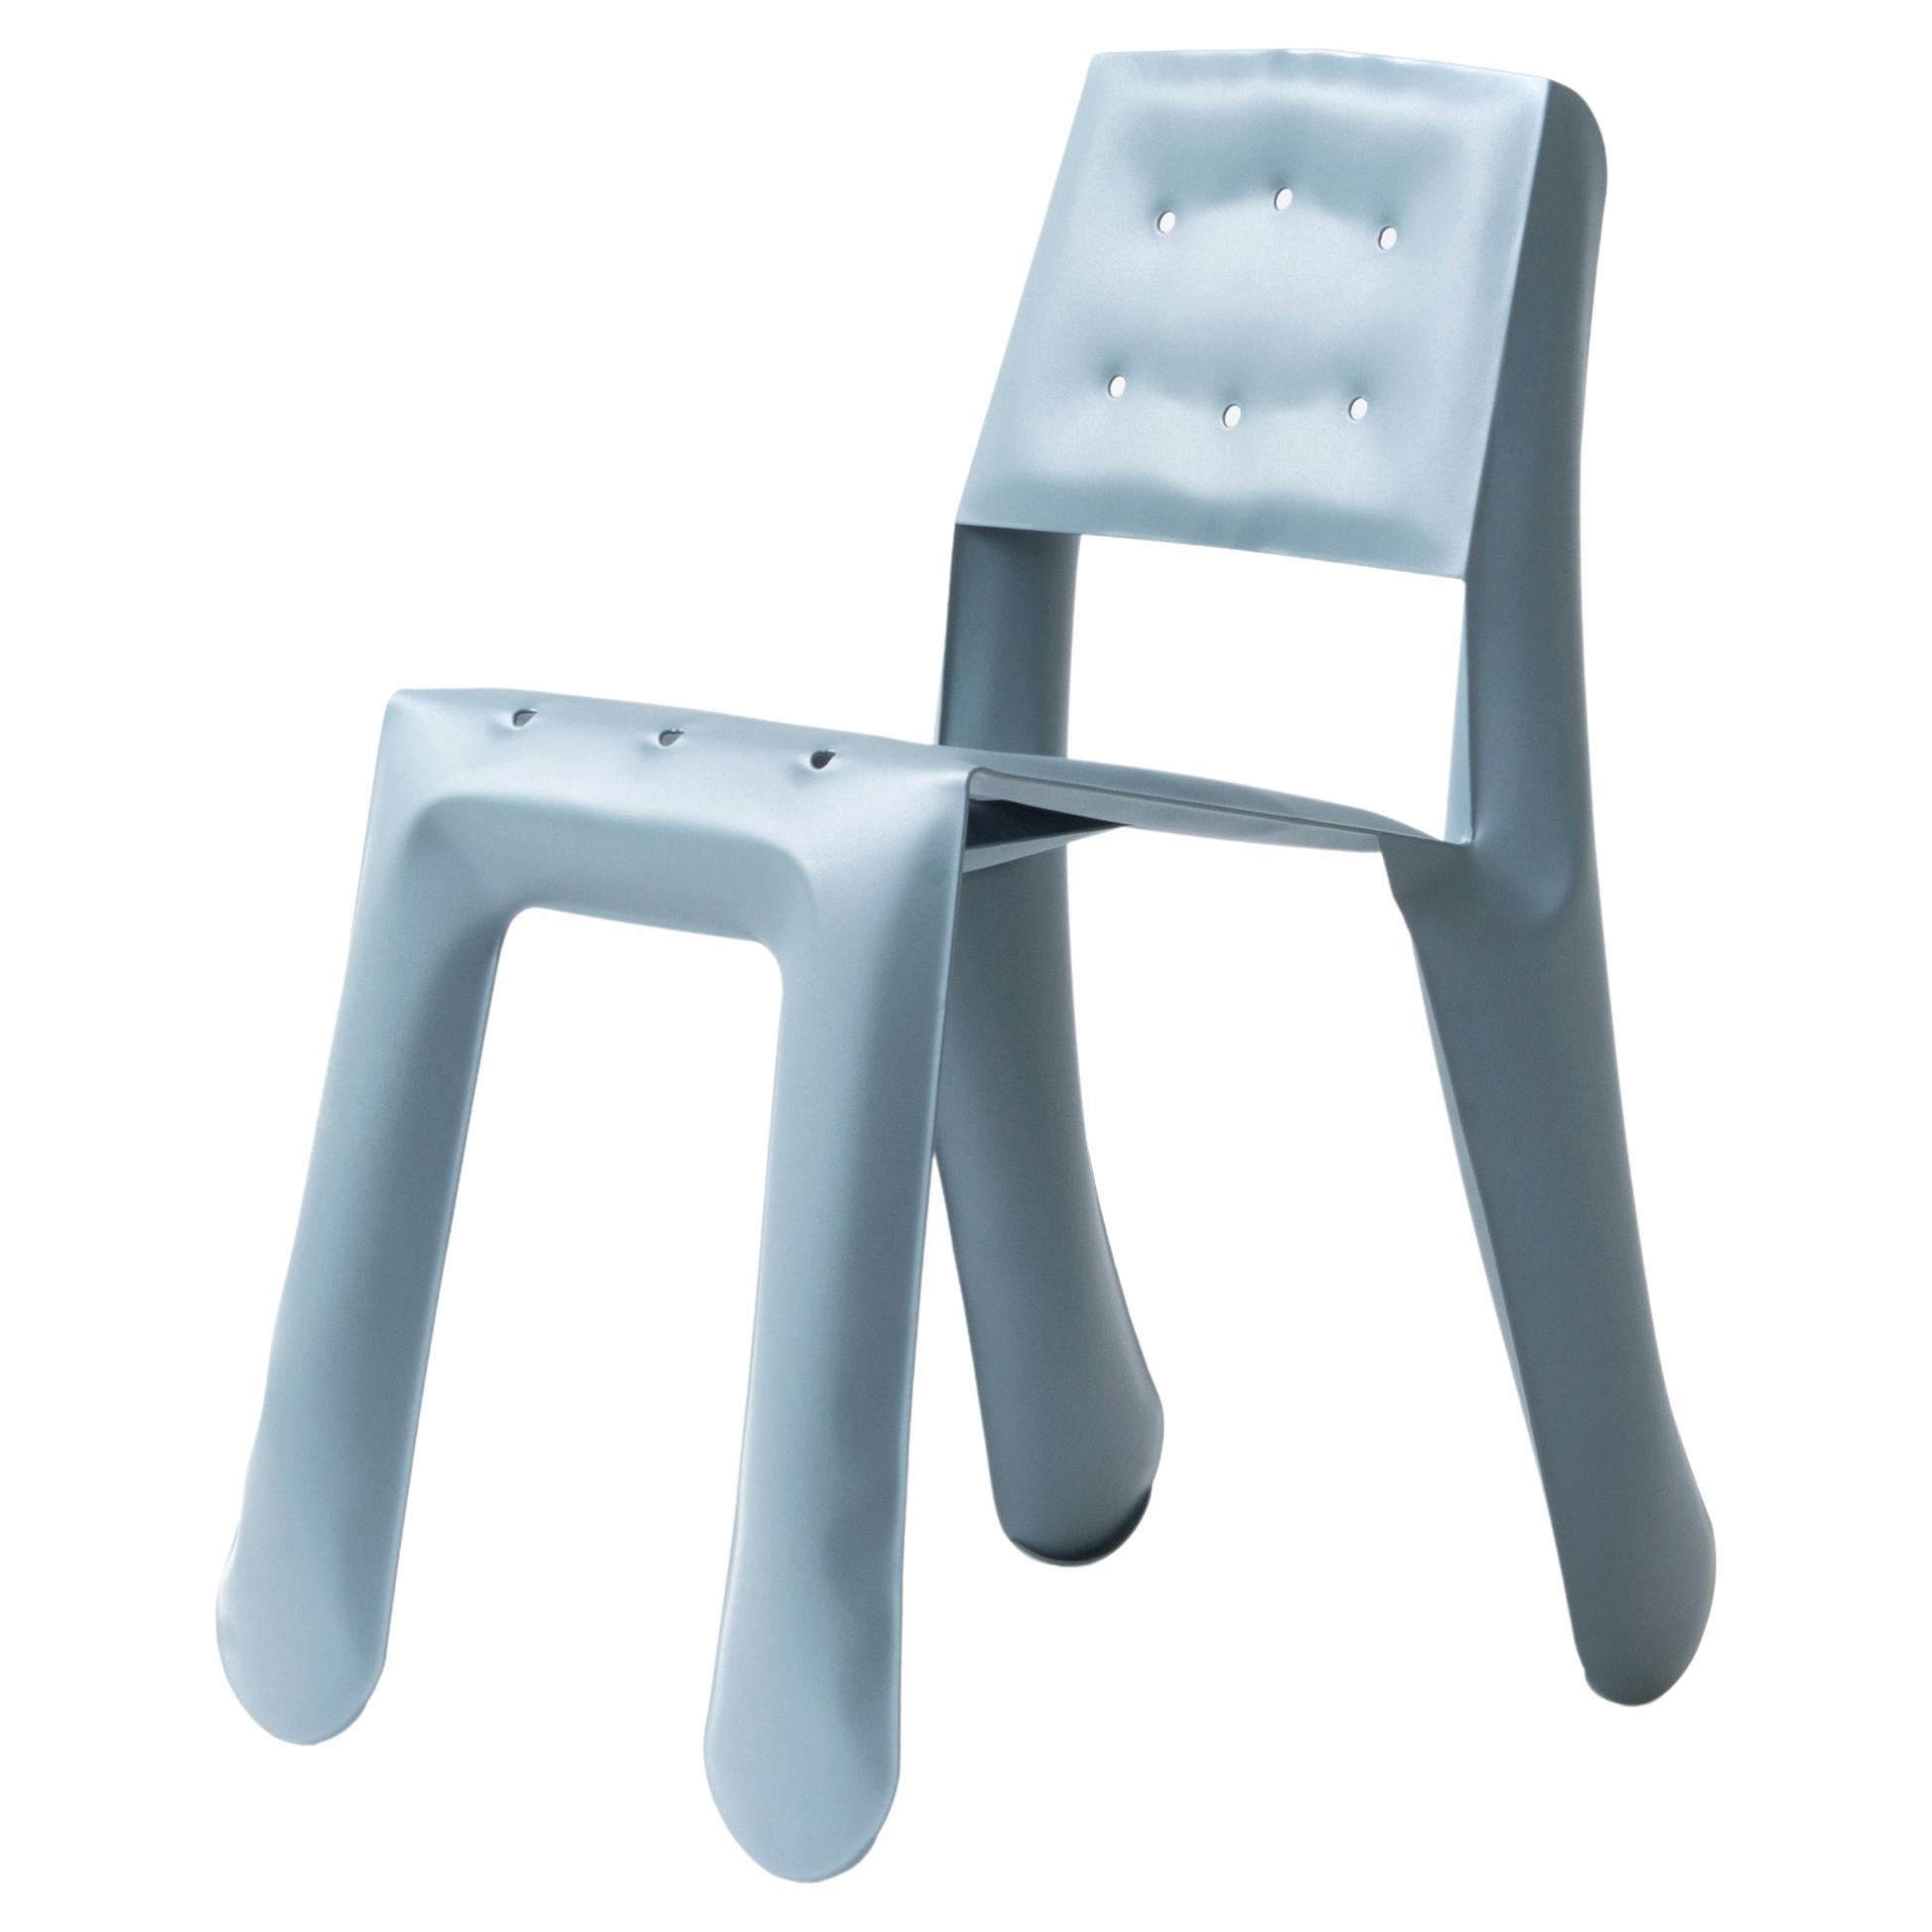 Chaise sculpturale 0,5 en aluminium bleu-gris Chippensteel de Zieta